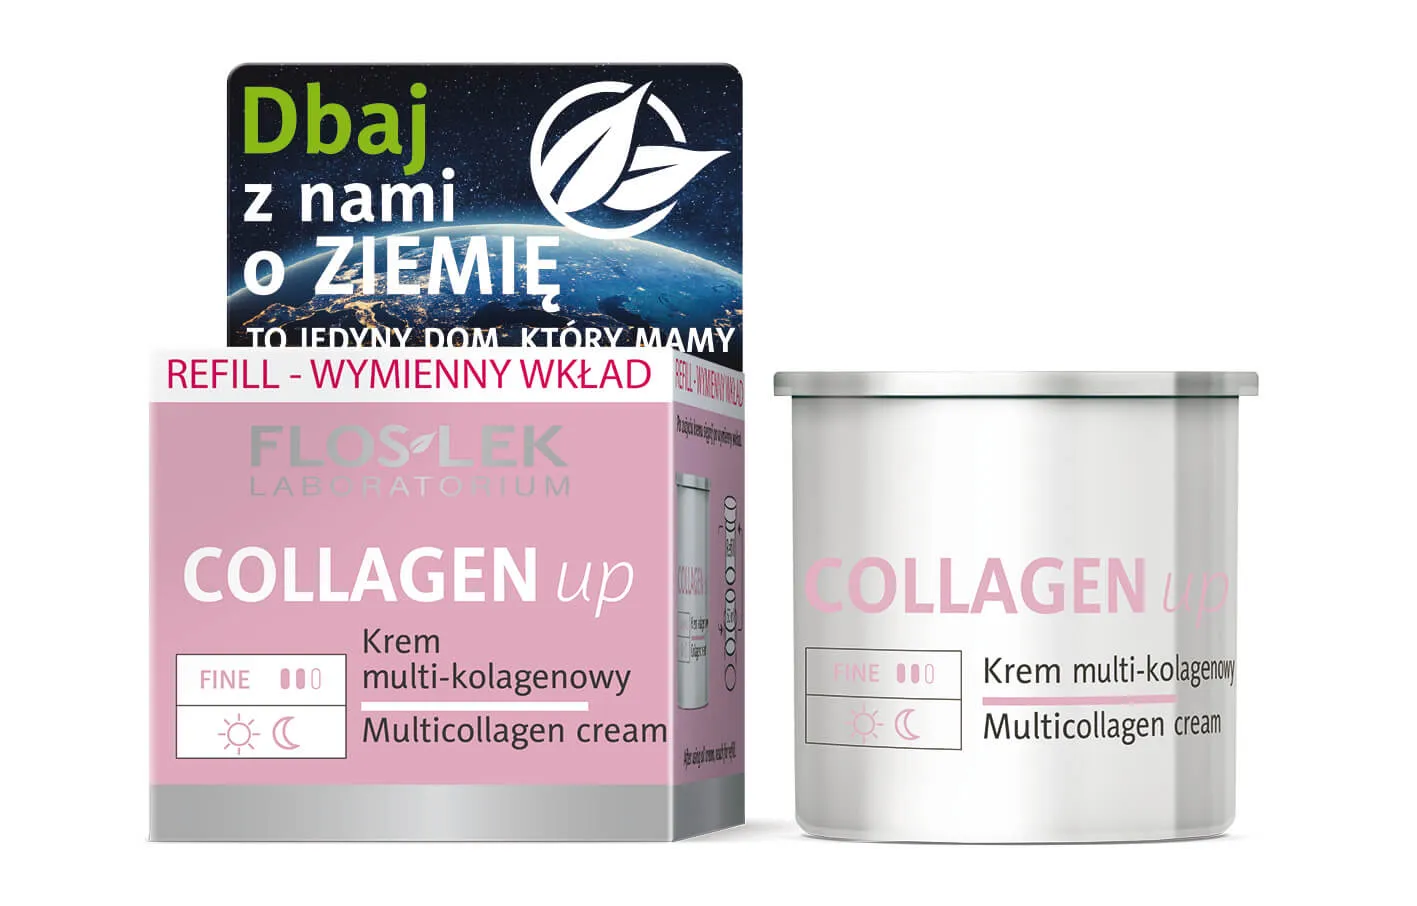 Floslek Collagen Up, krem multi-kolagenowy-refill 60+, 50 ml